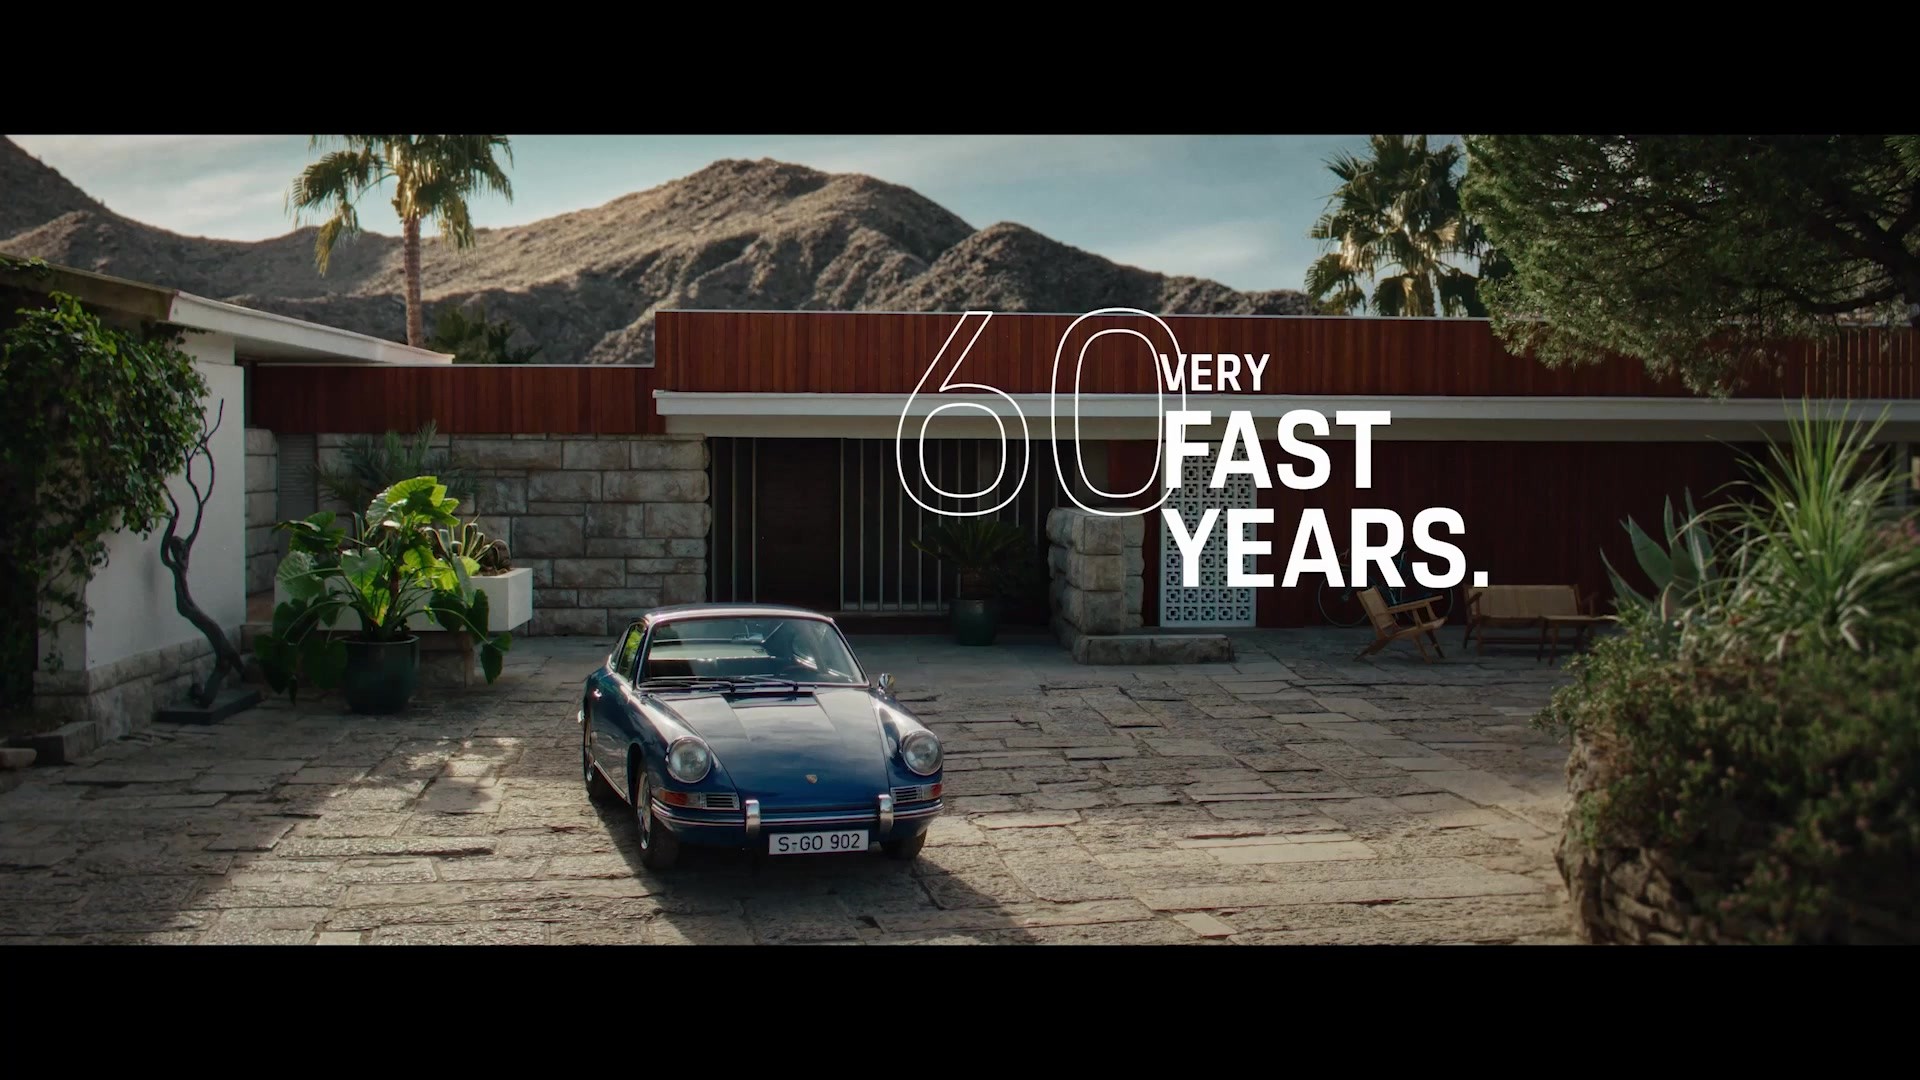 "60 very fast years"